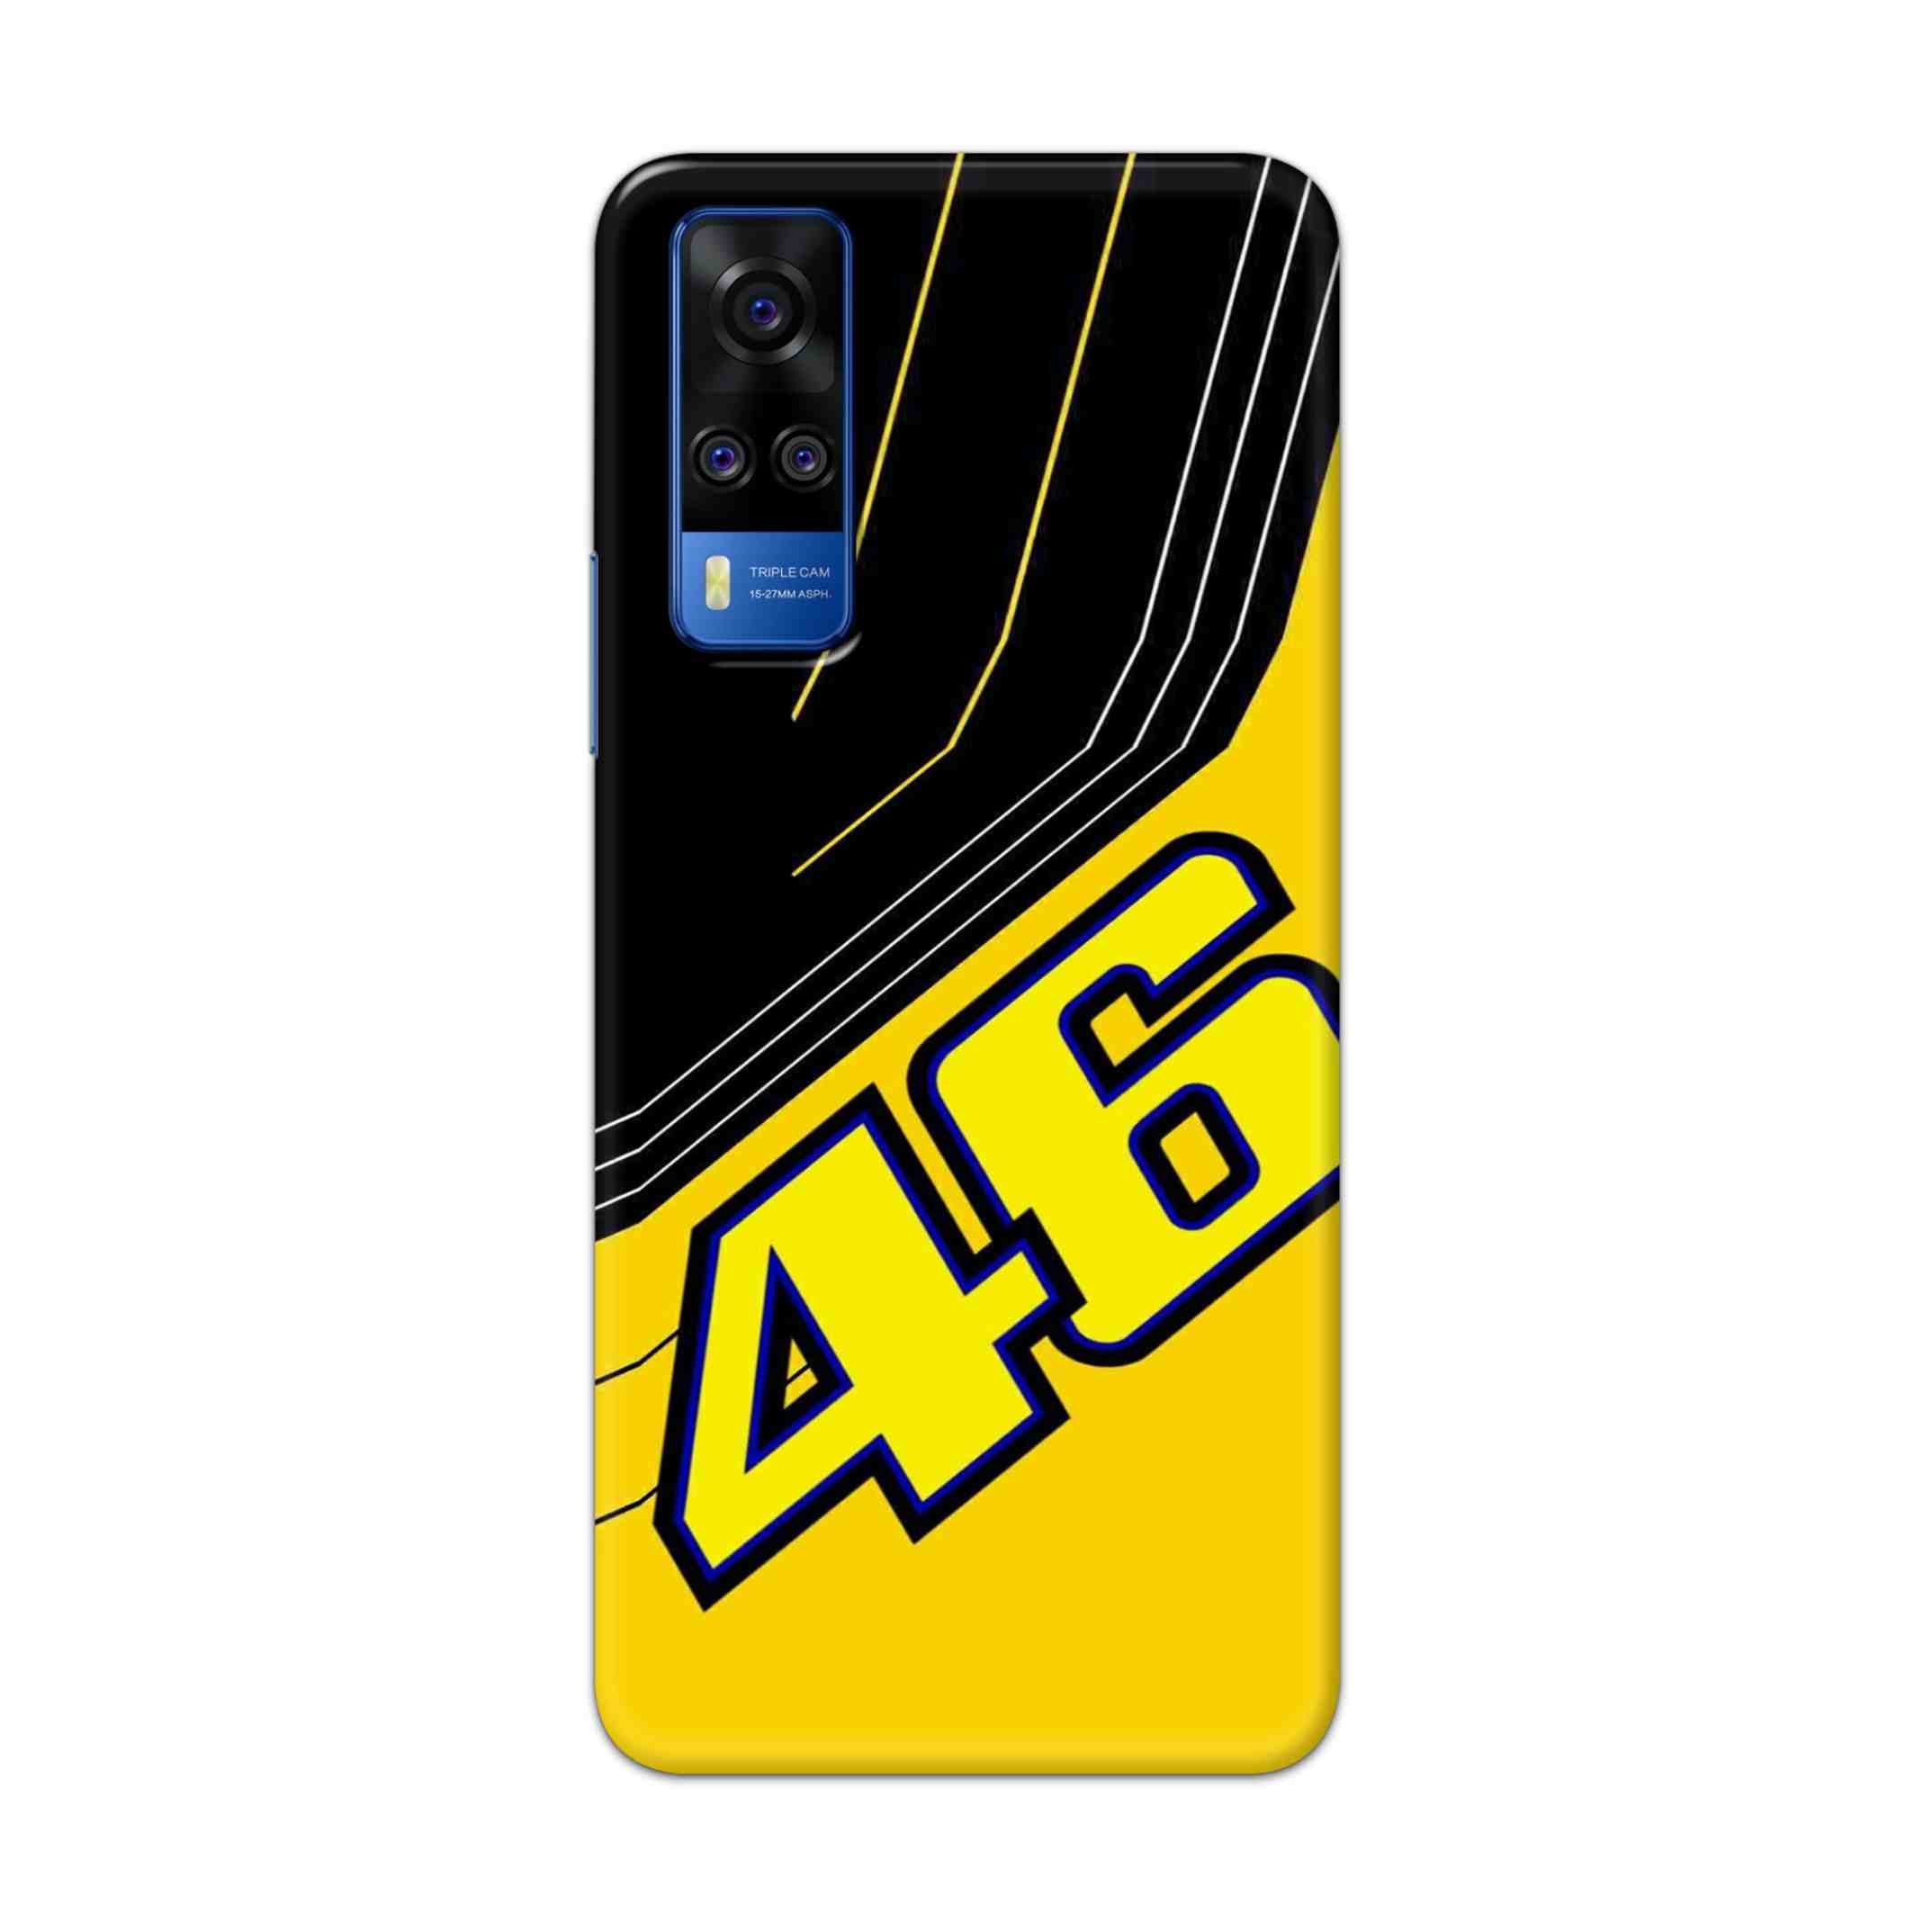 Buy 46 Hard Back Mobile Phone Case Cover For Vivo Y51a Online